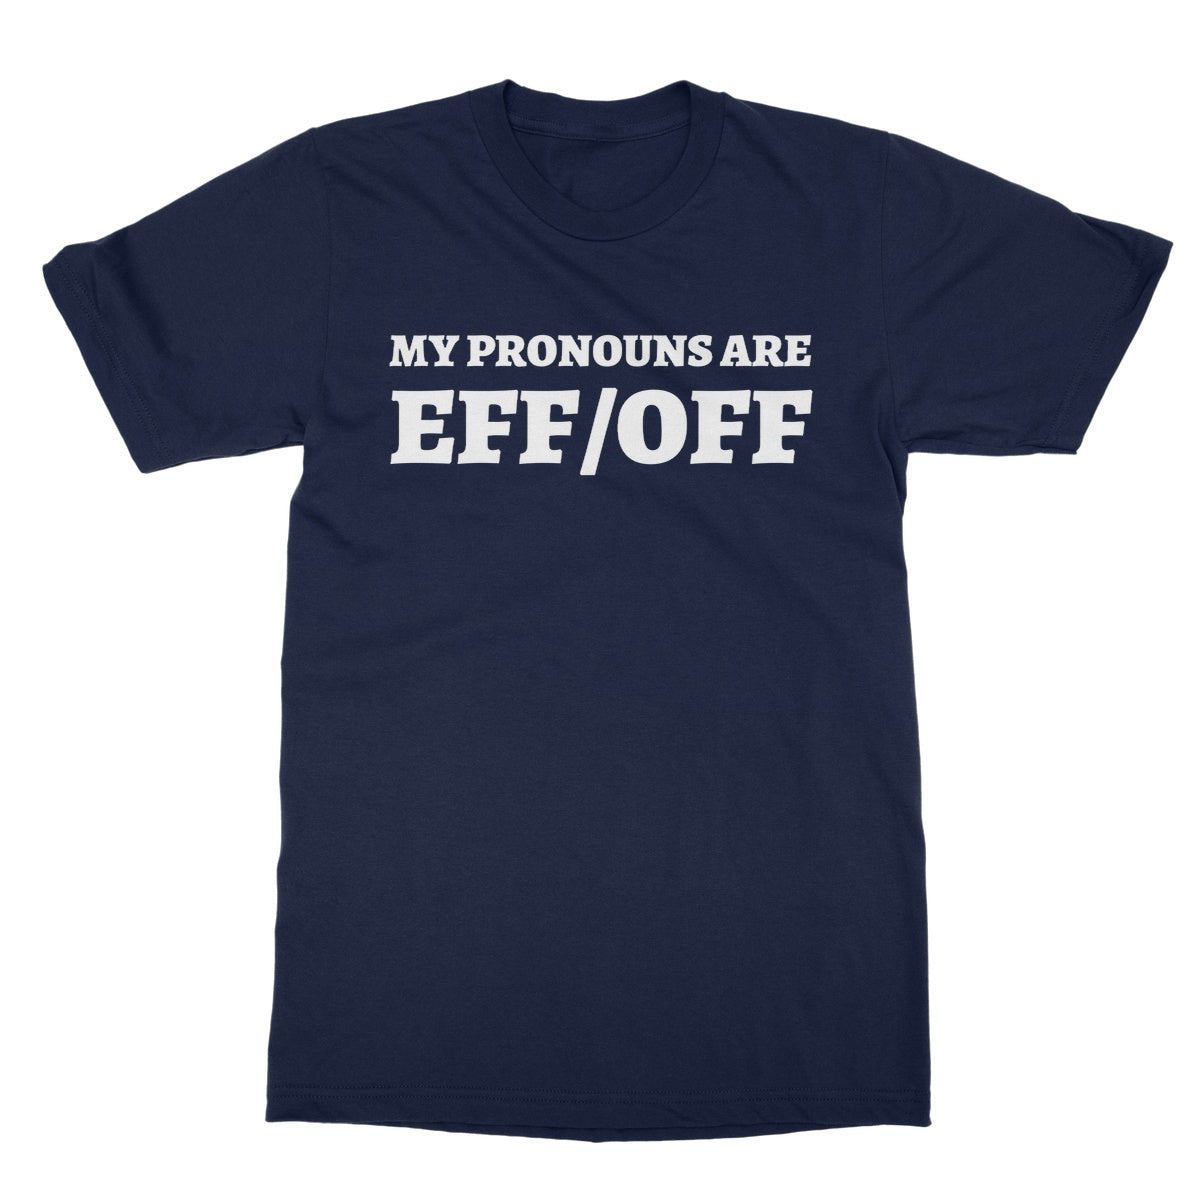 eff off t shirt navy